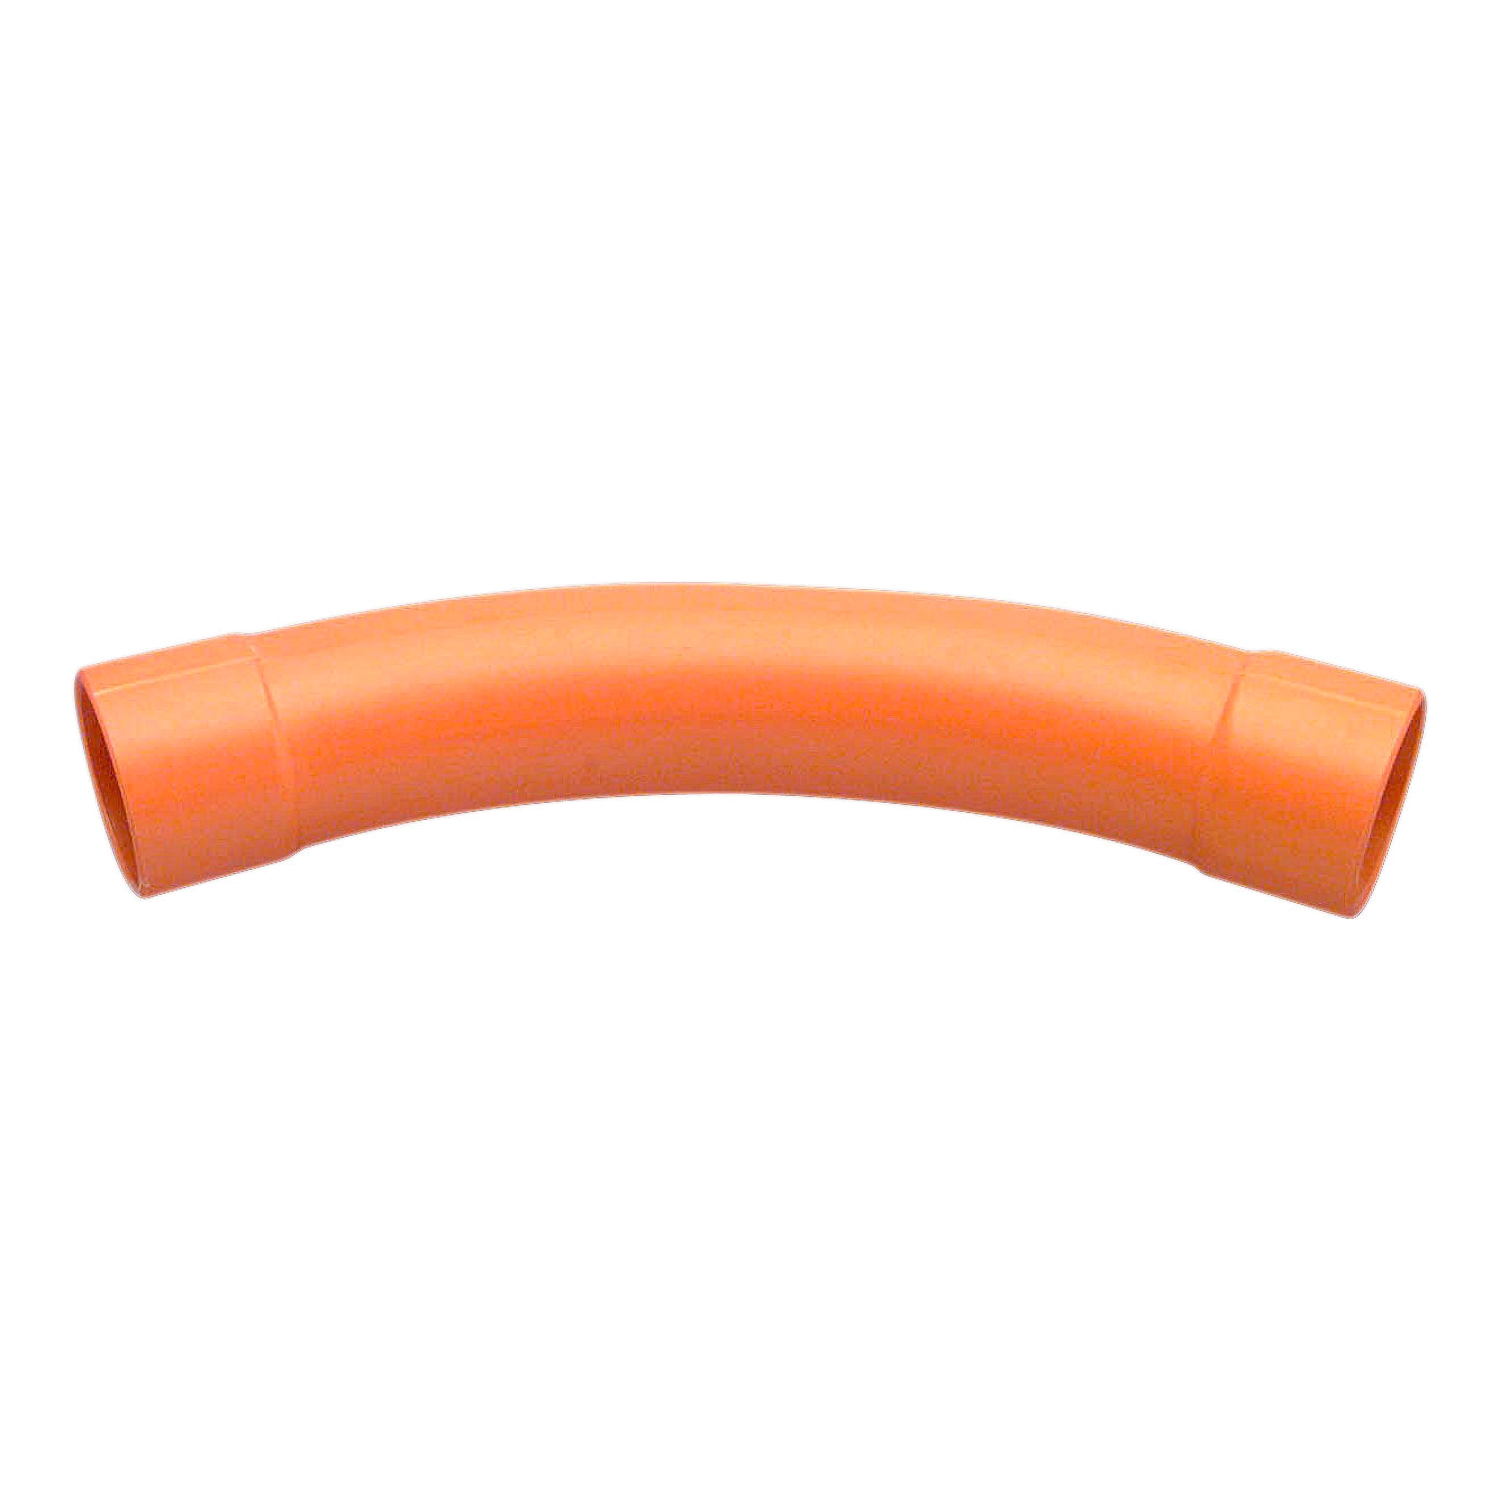 Solid Fittings - PVC, 45 Degree Heavy Duty Sweep Bends, 50mm, Orange